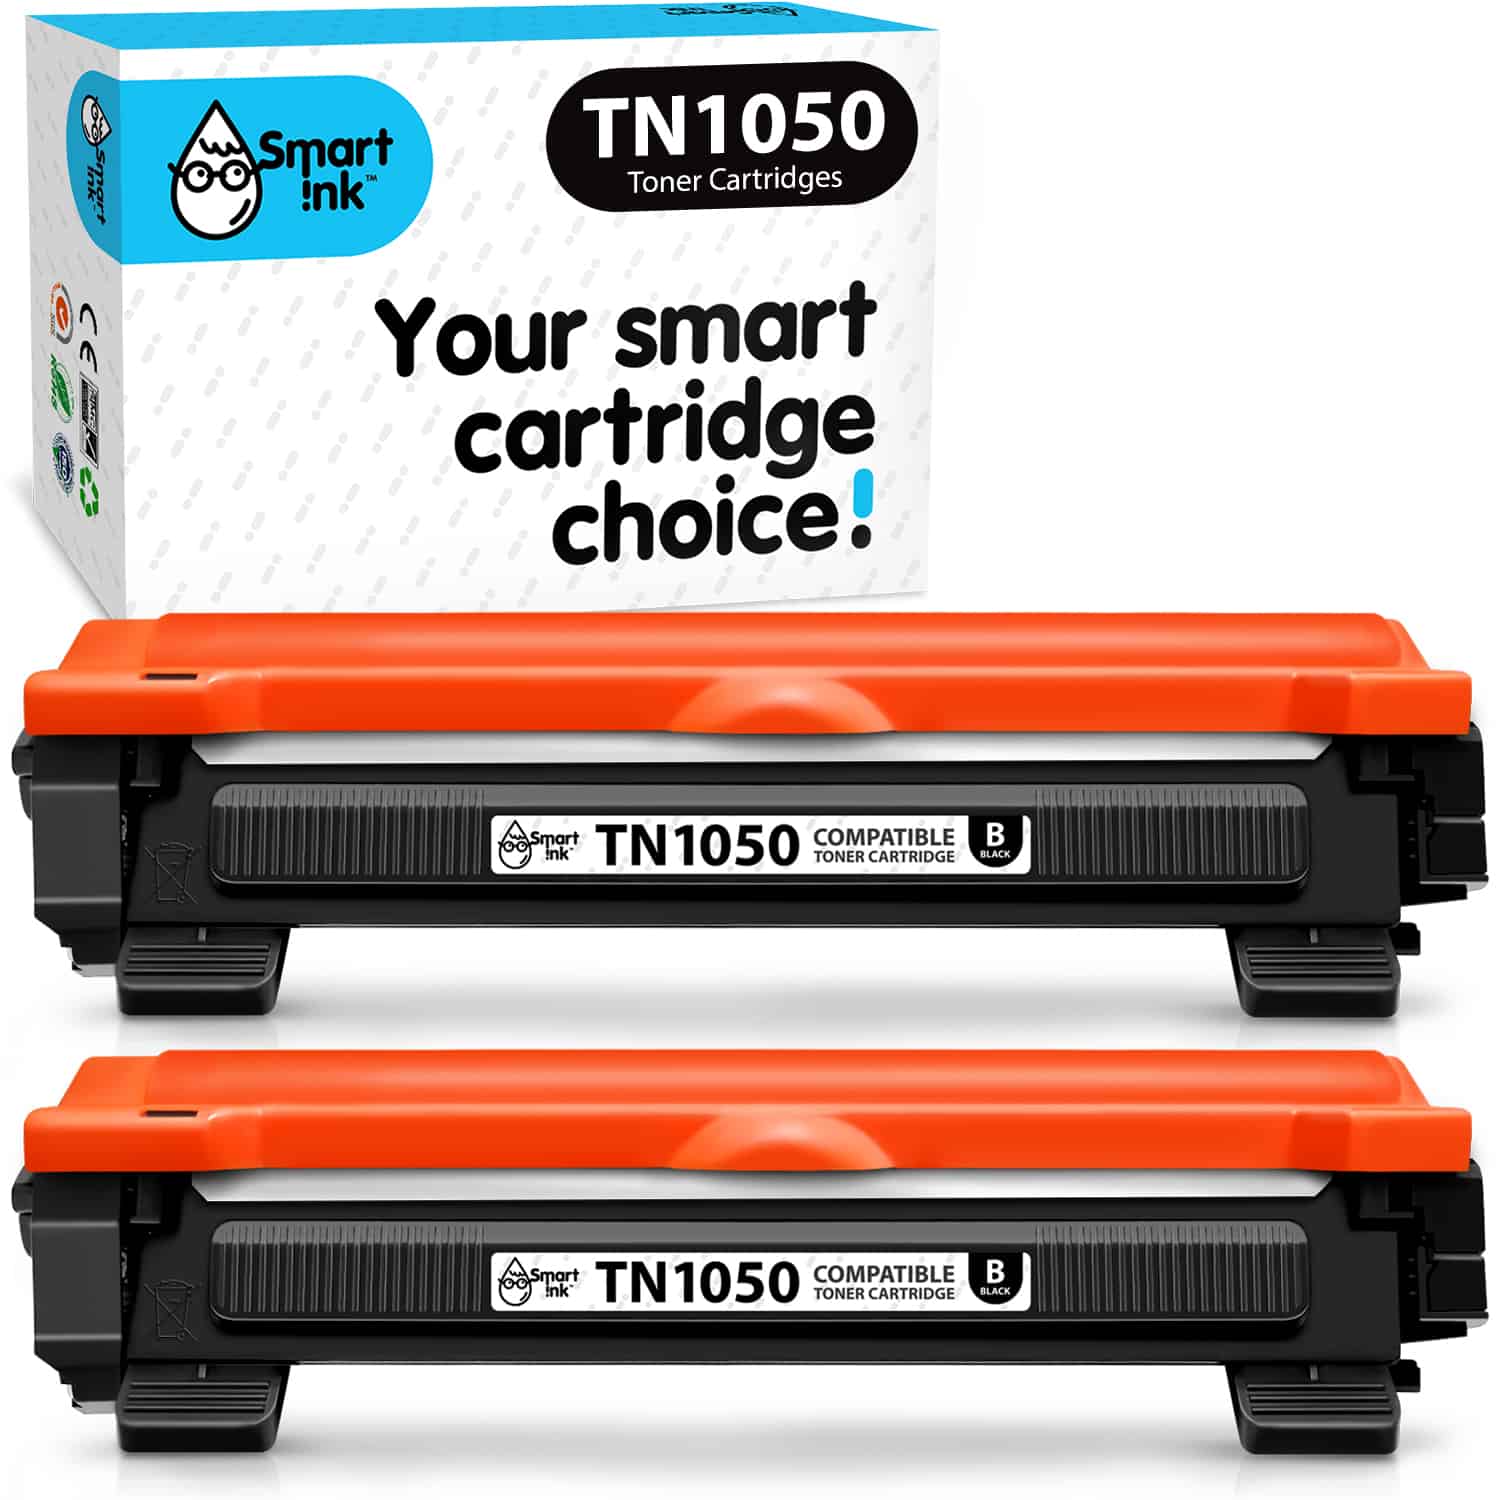 Uitgebreid mythologie zoet Brother TN 1050 Replacement Toner Cartridges - Buy Brother TN 1050 Toner  Cartridge in EU at the best price | Smart Ink